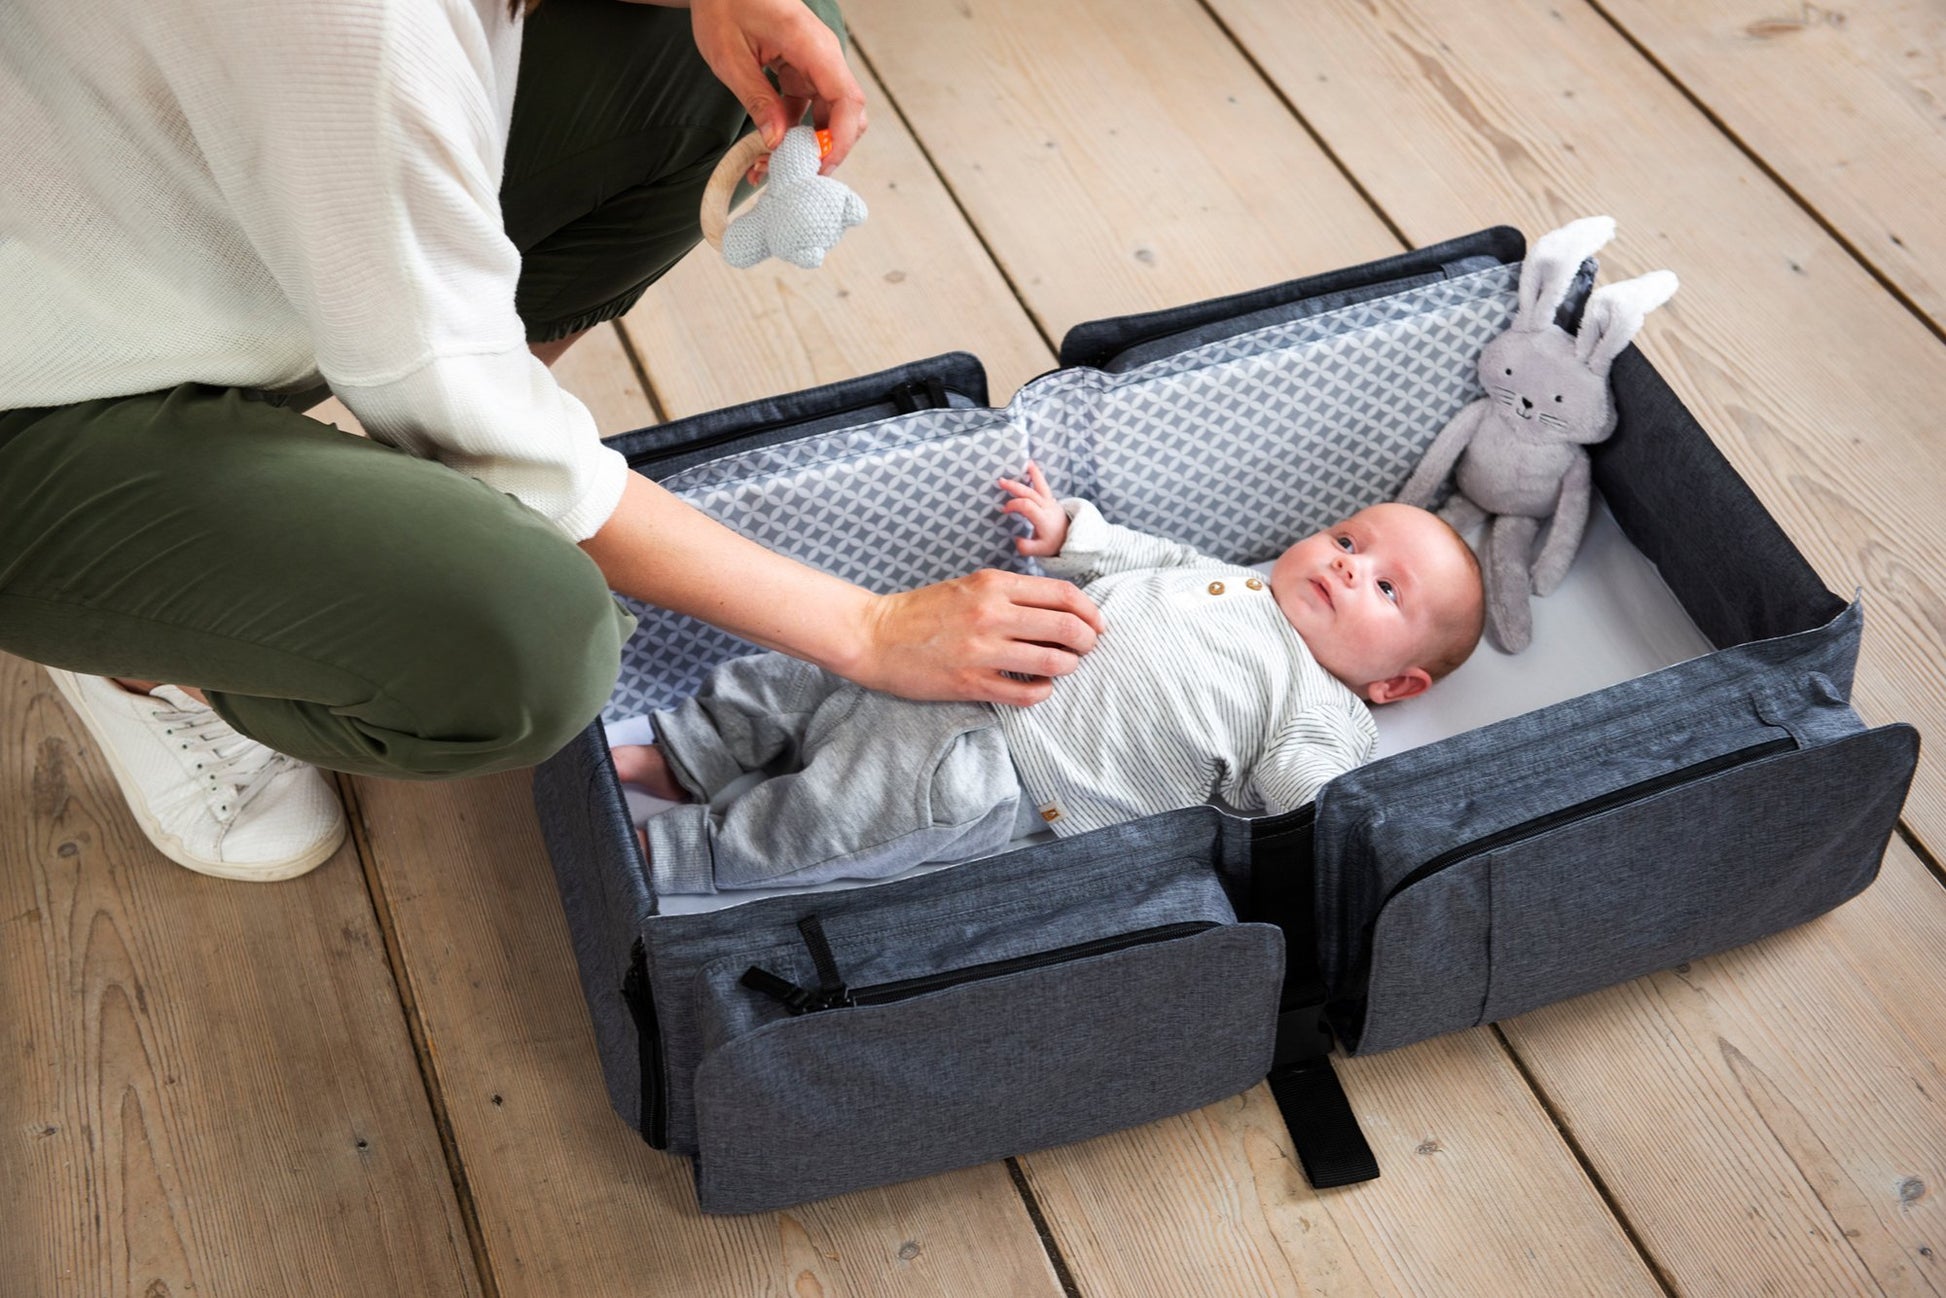 doomoo - Baby Travel Nursery Bag & Carrycot - BambiniJO | Buy Online | Jordan